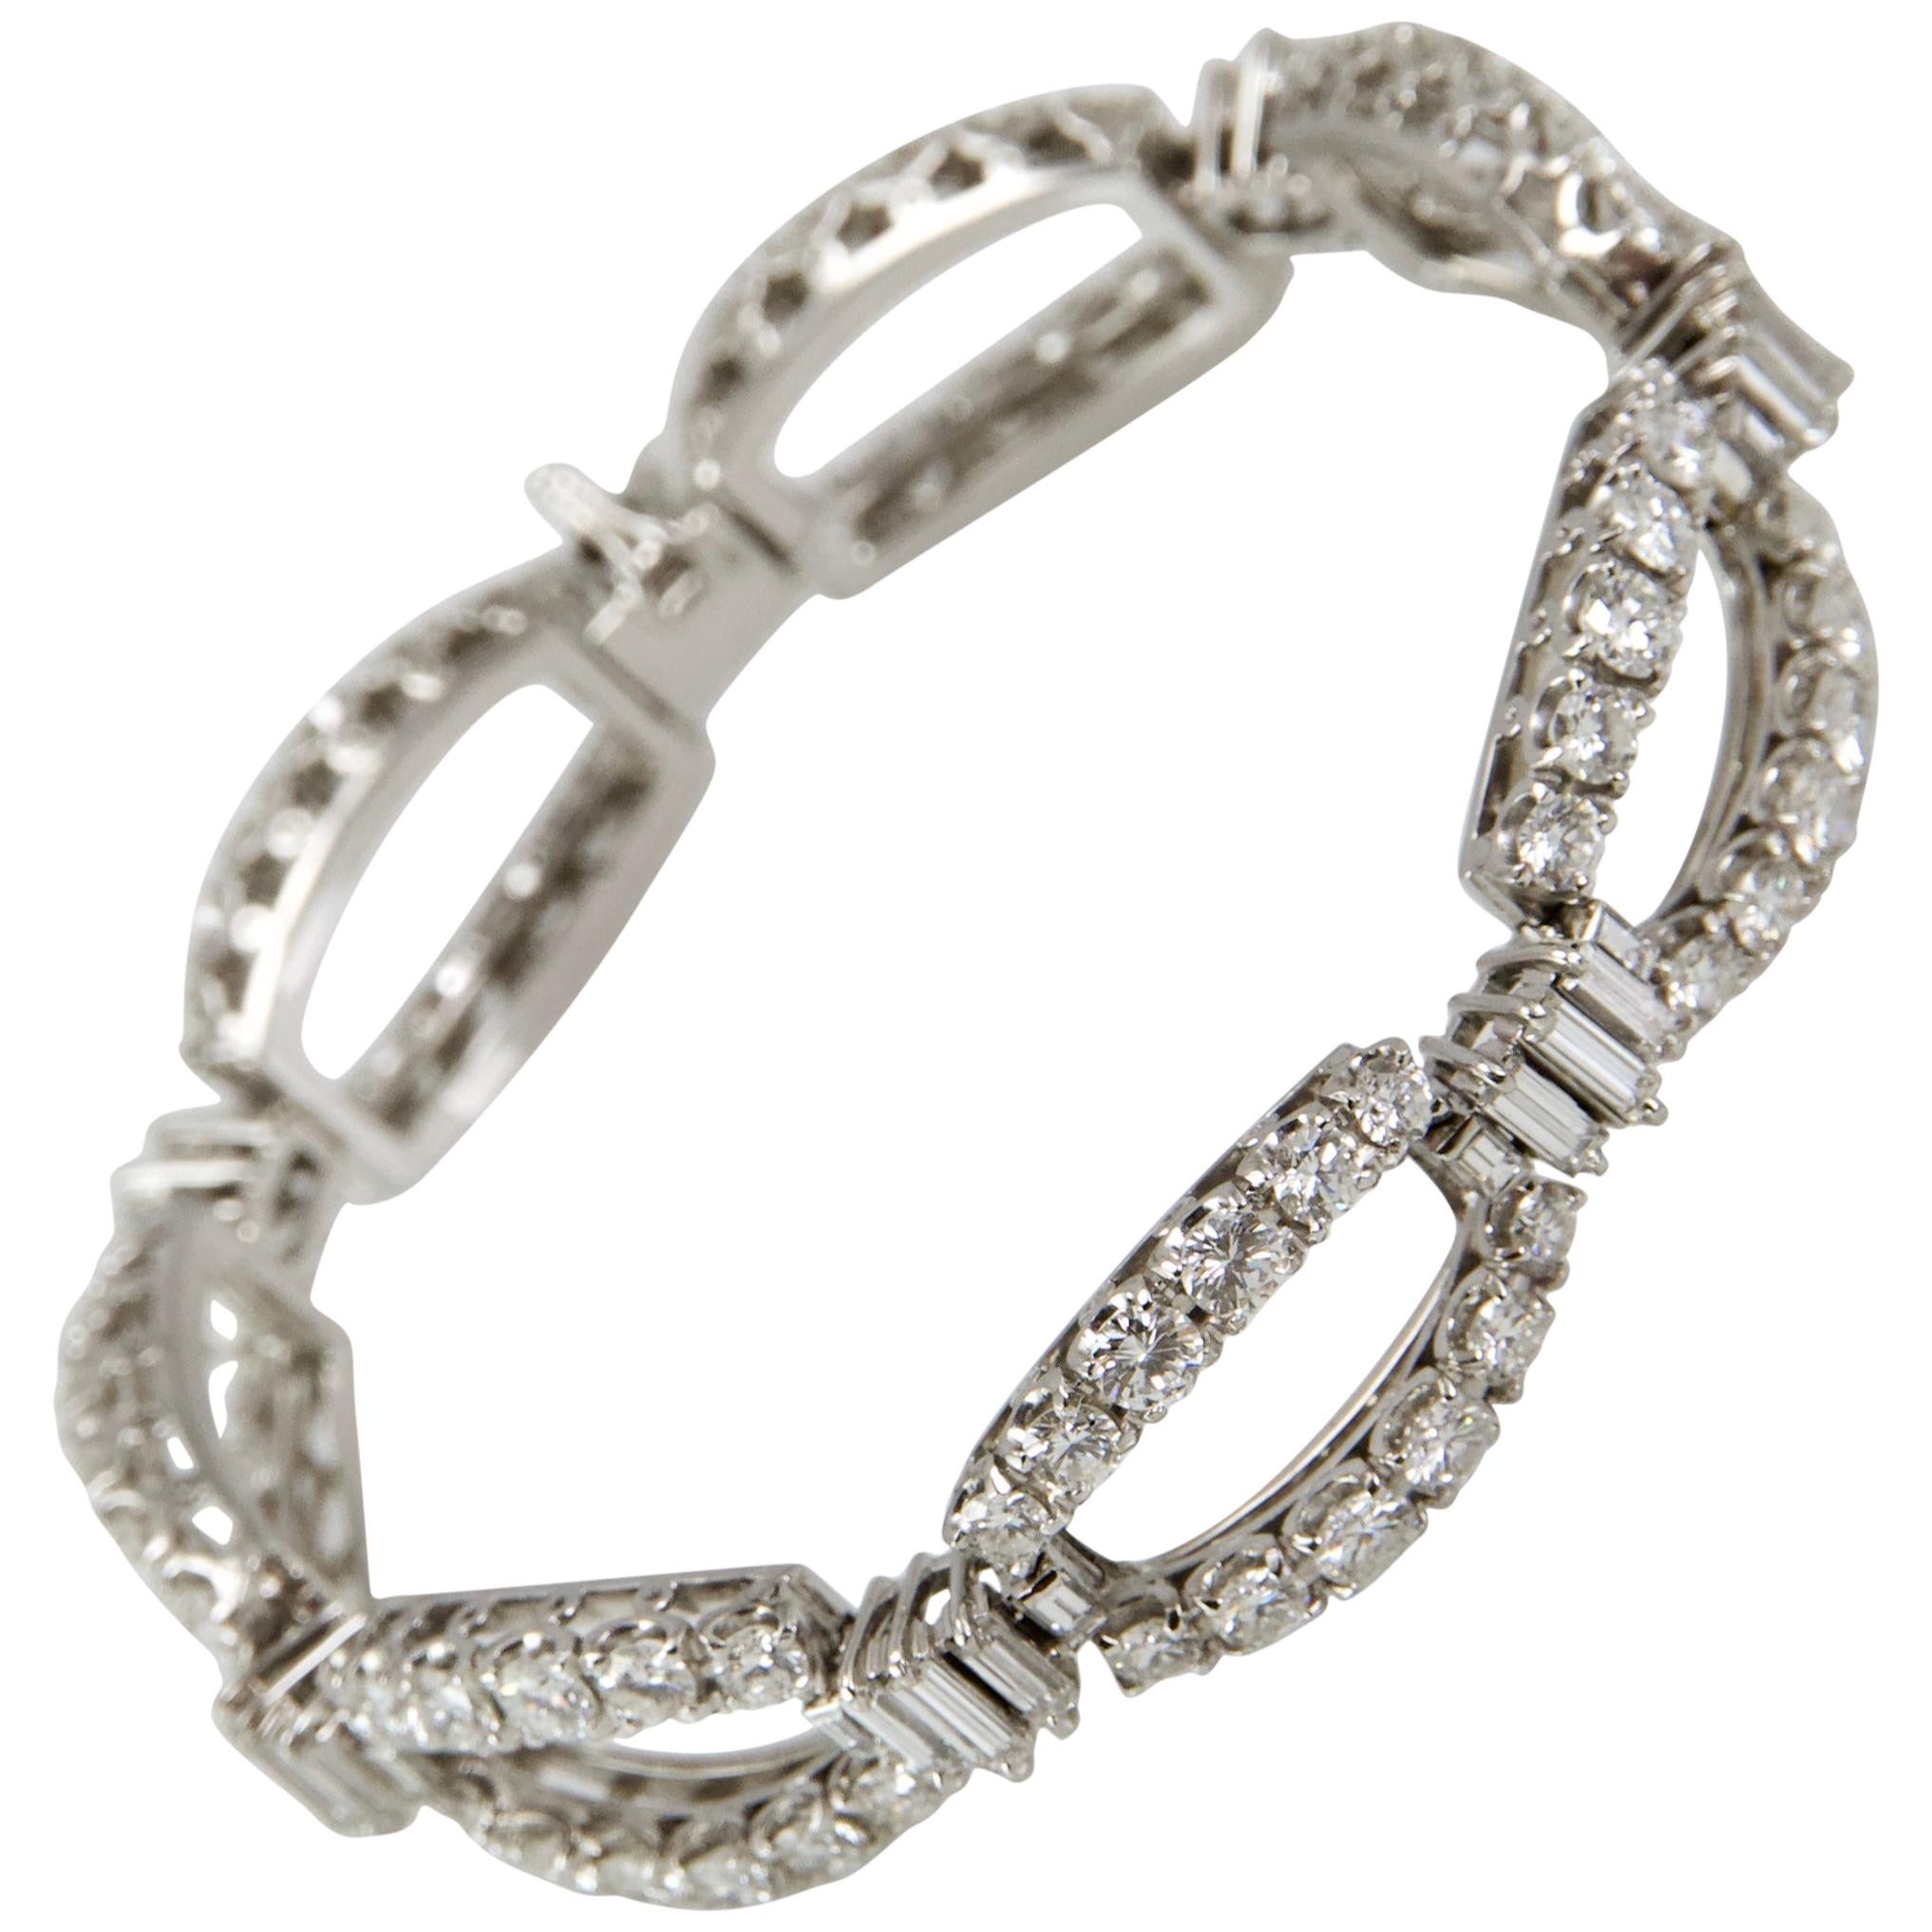 1960 White Gold Diamond Chain Bracelet Made in France For Sale